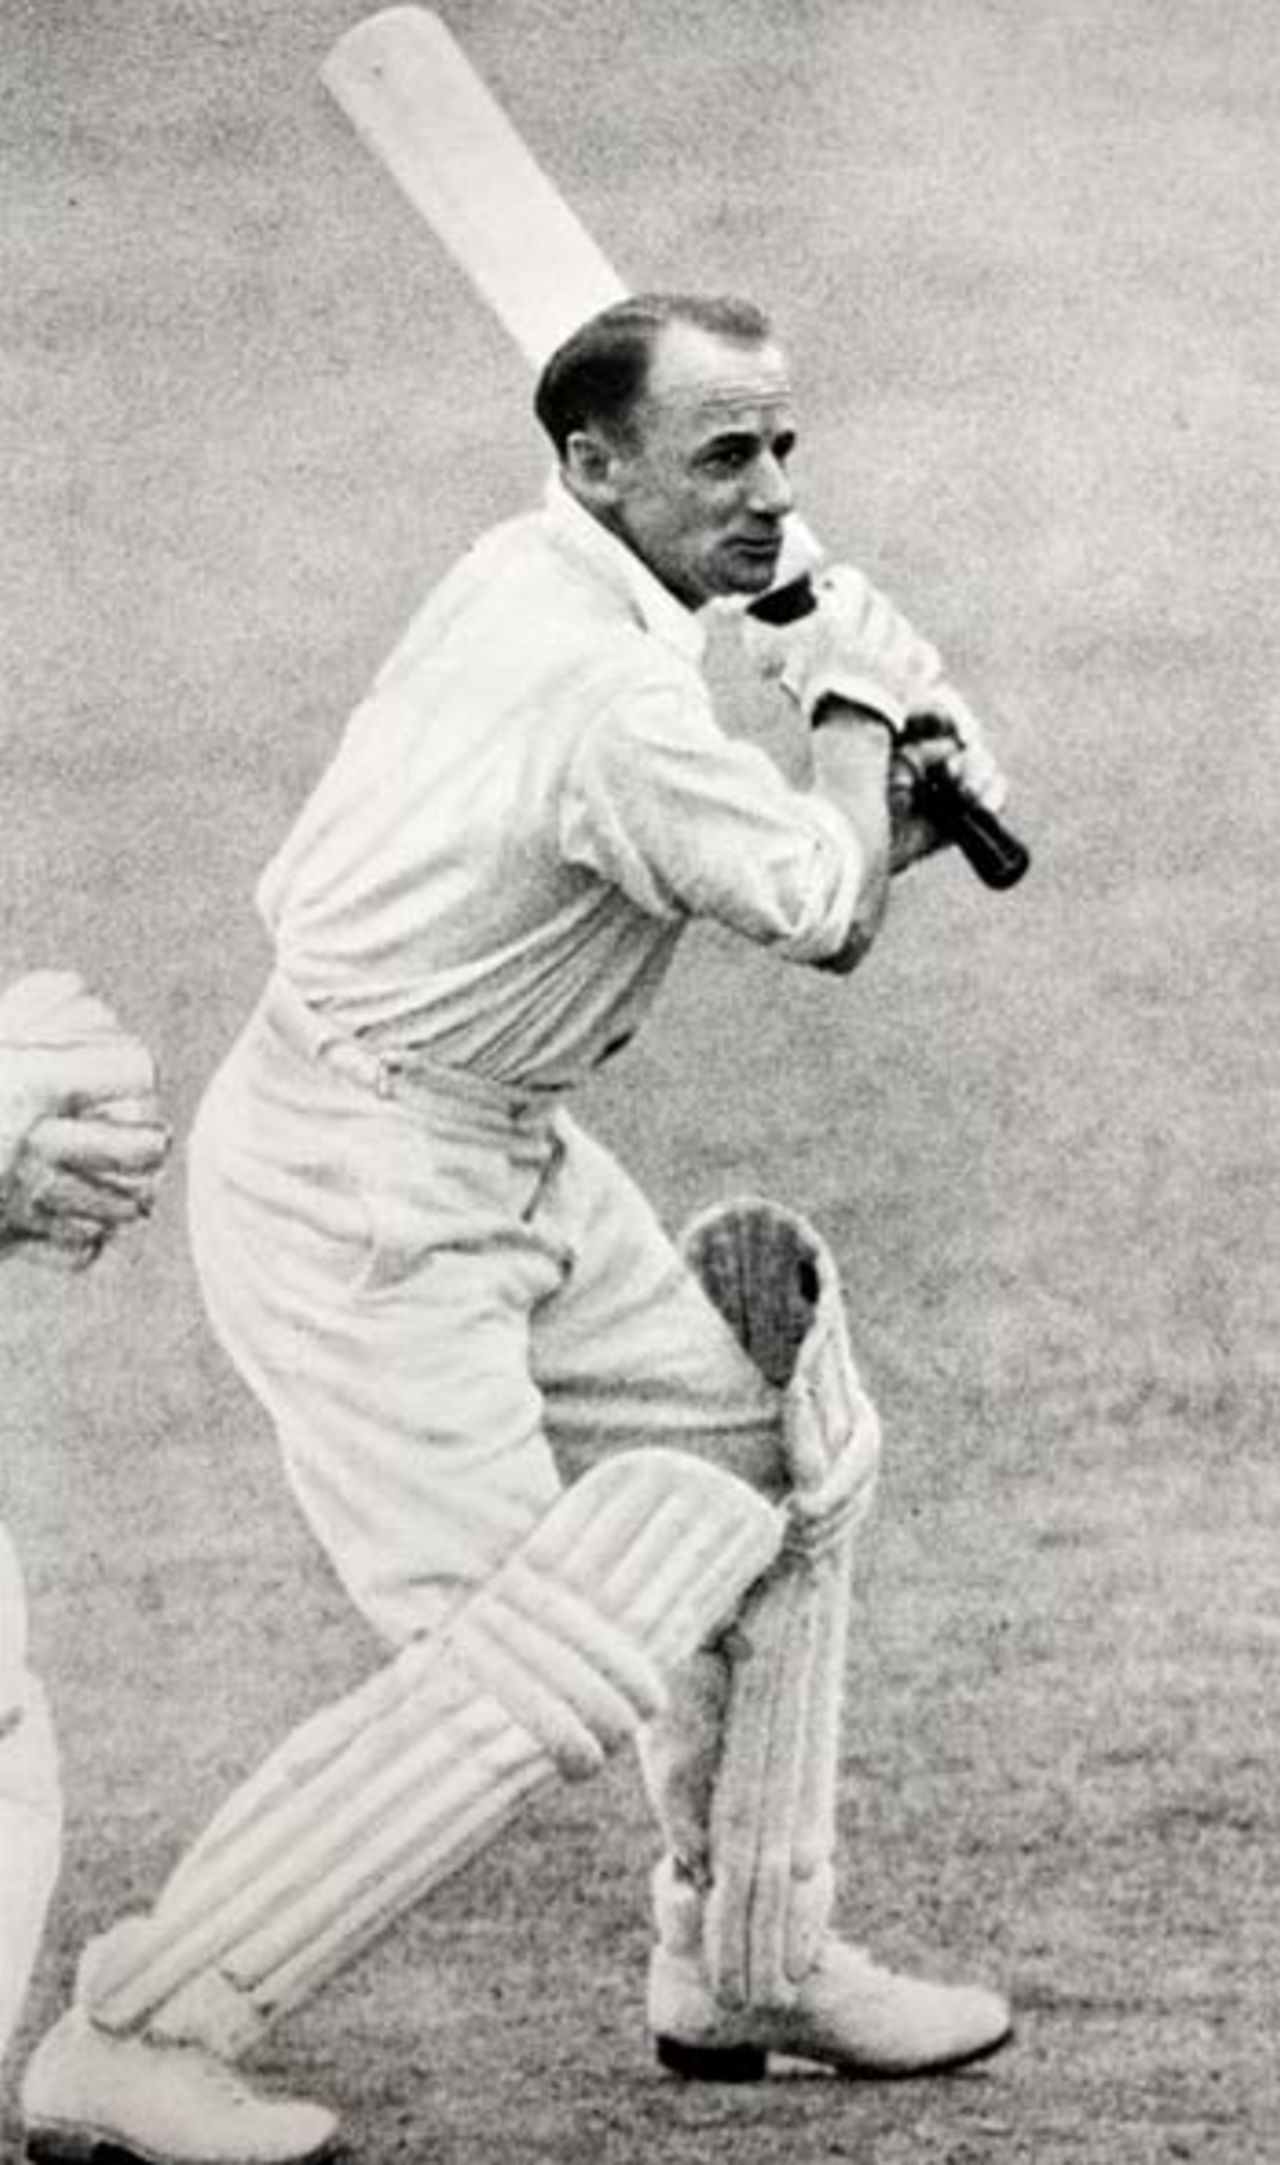 Don Bradman batting in 1948